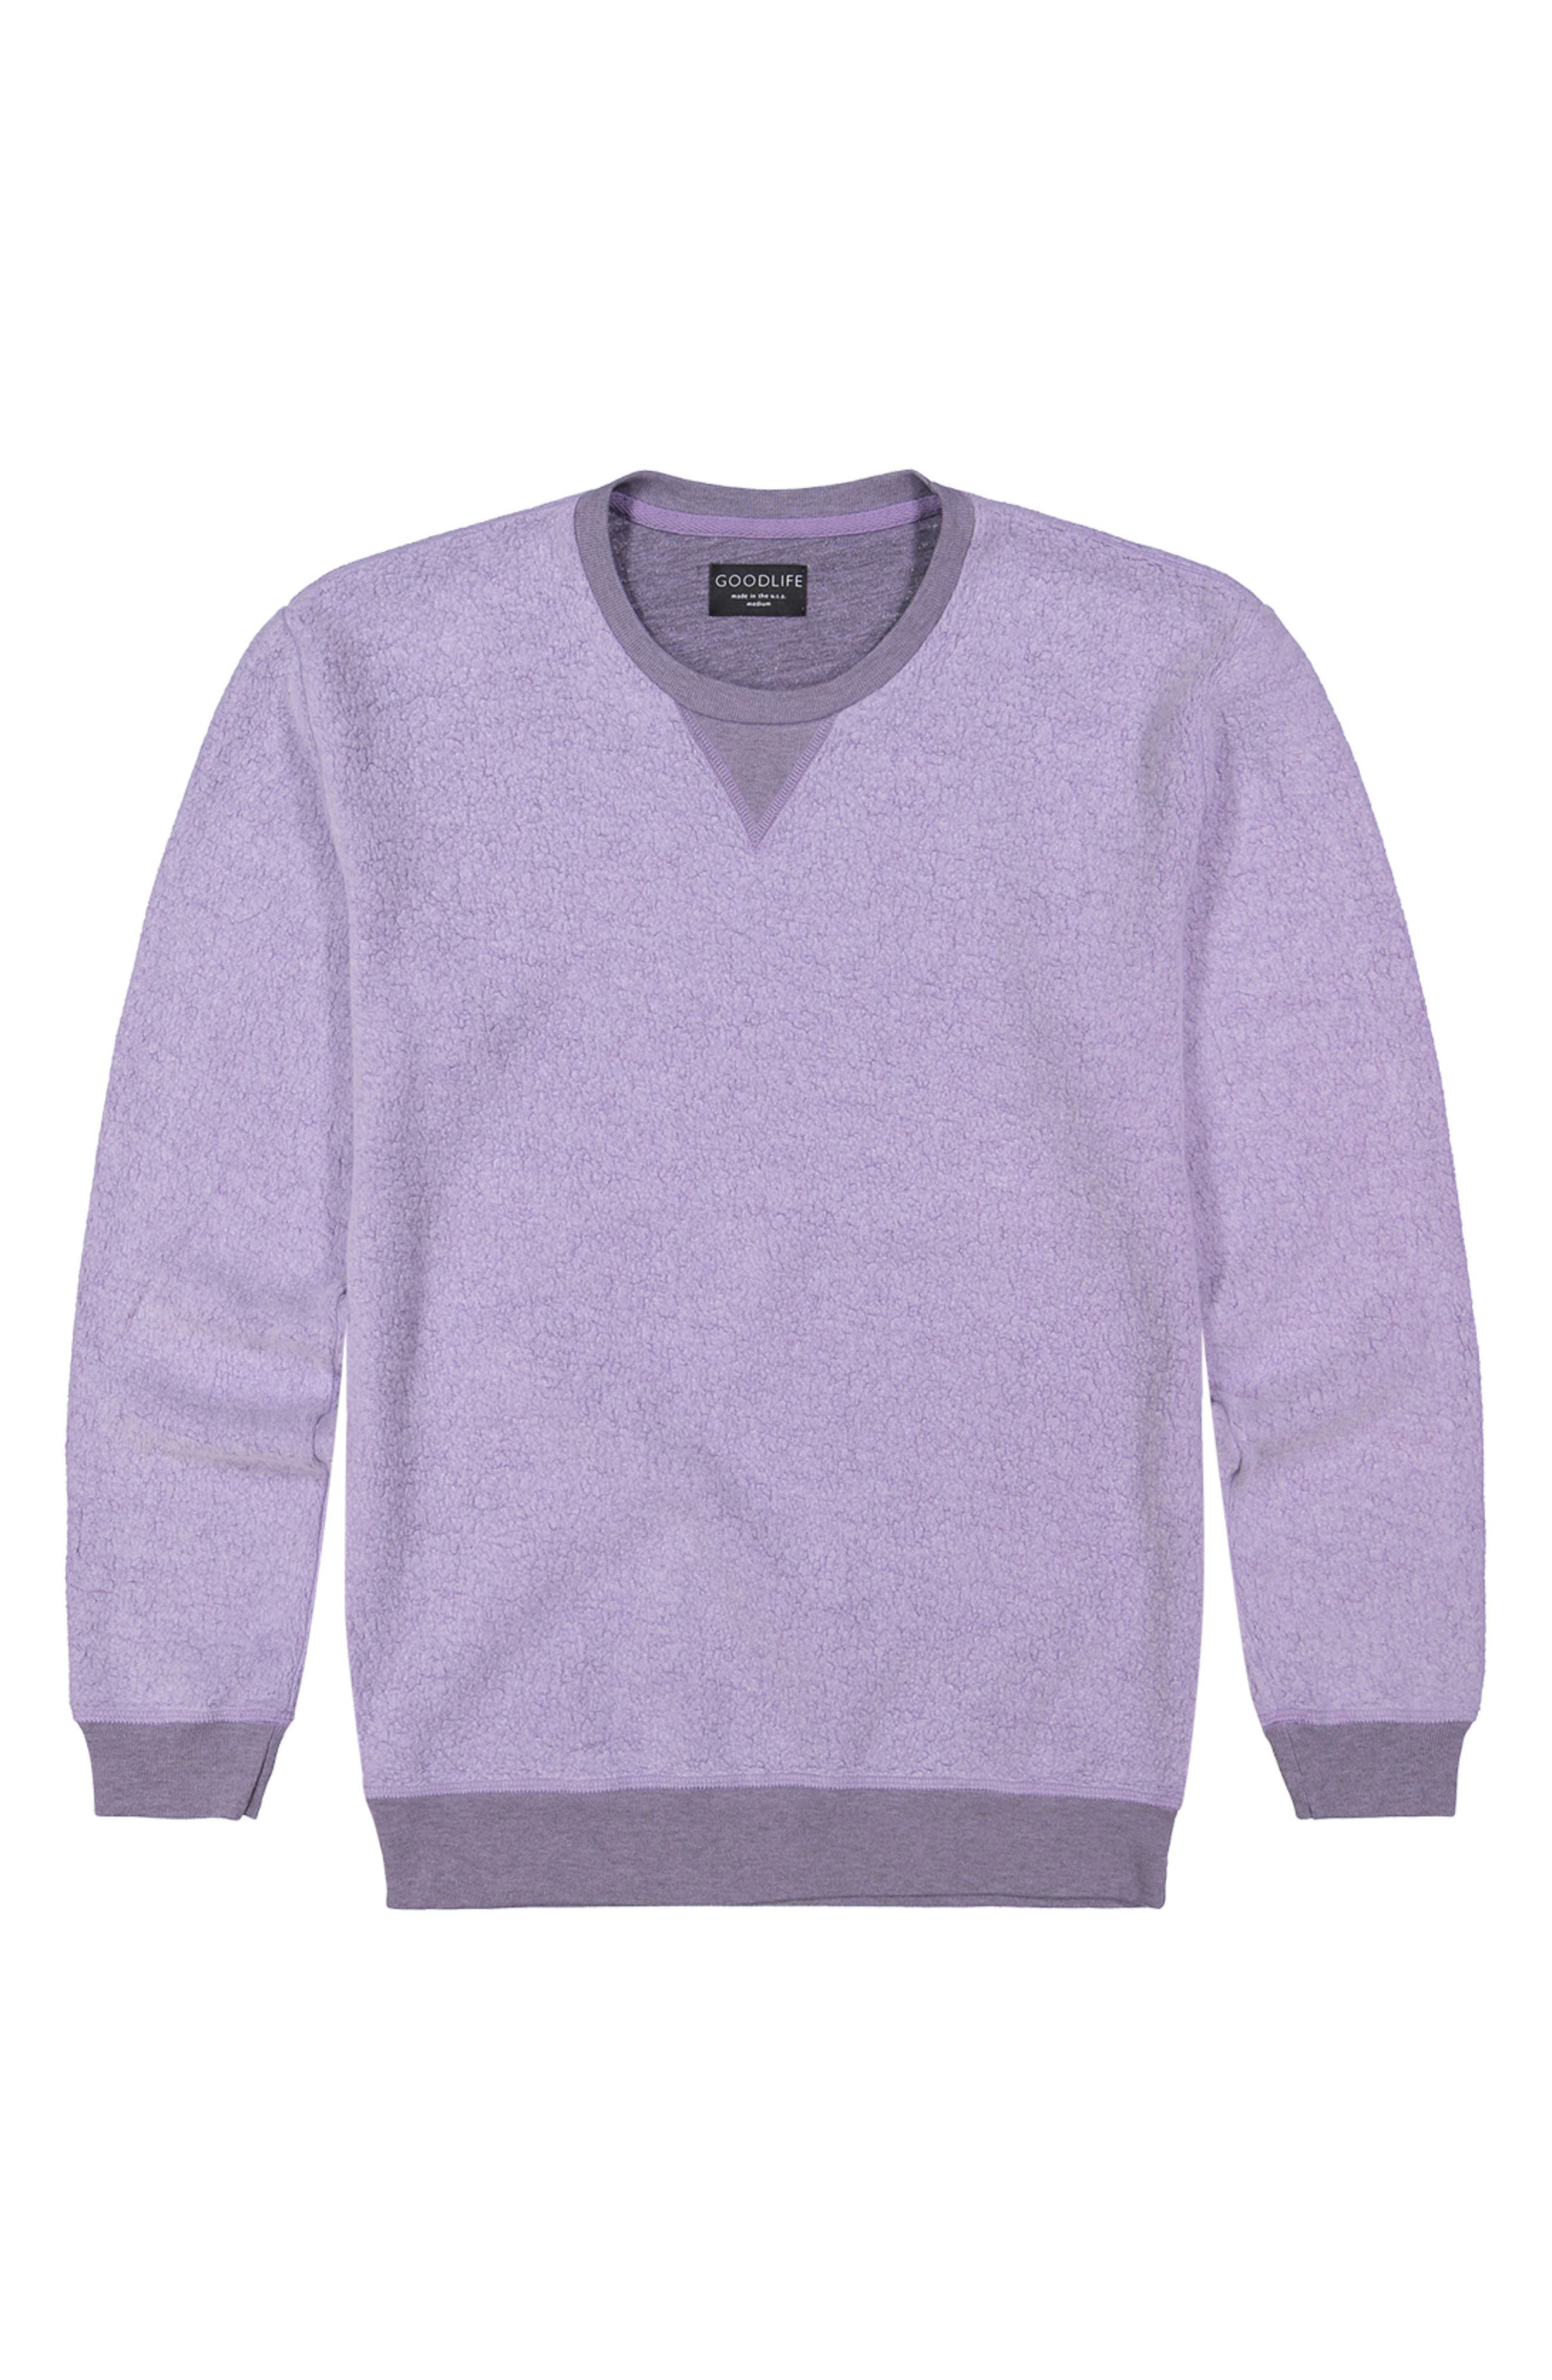 nike mens purple sweatshirt